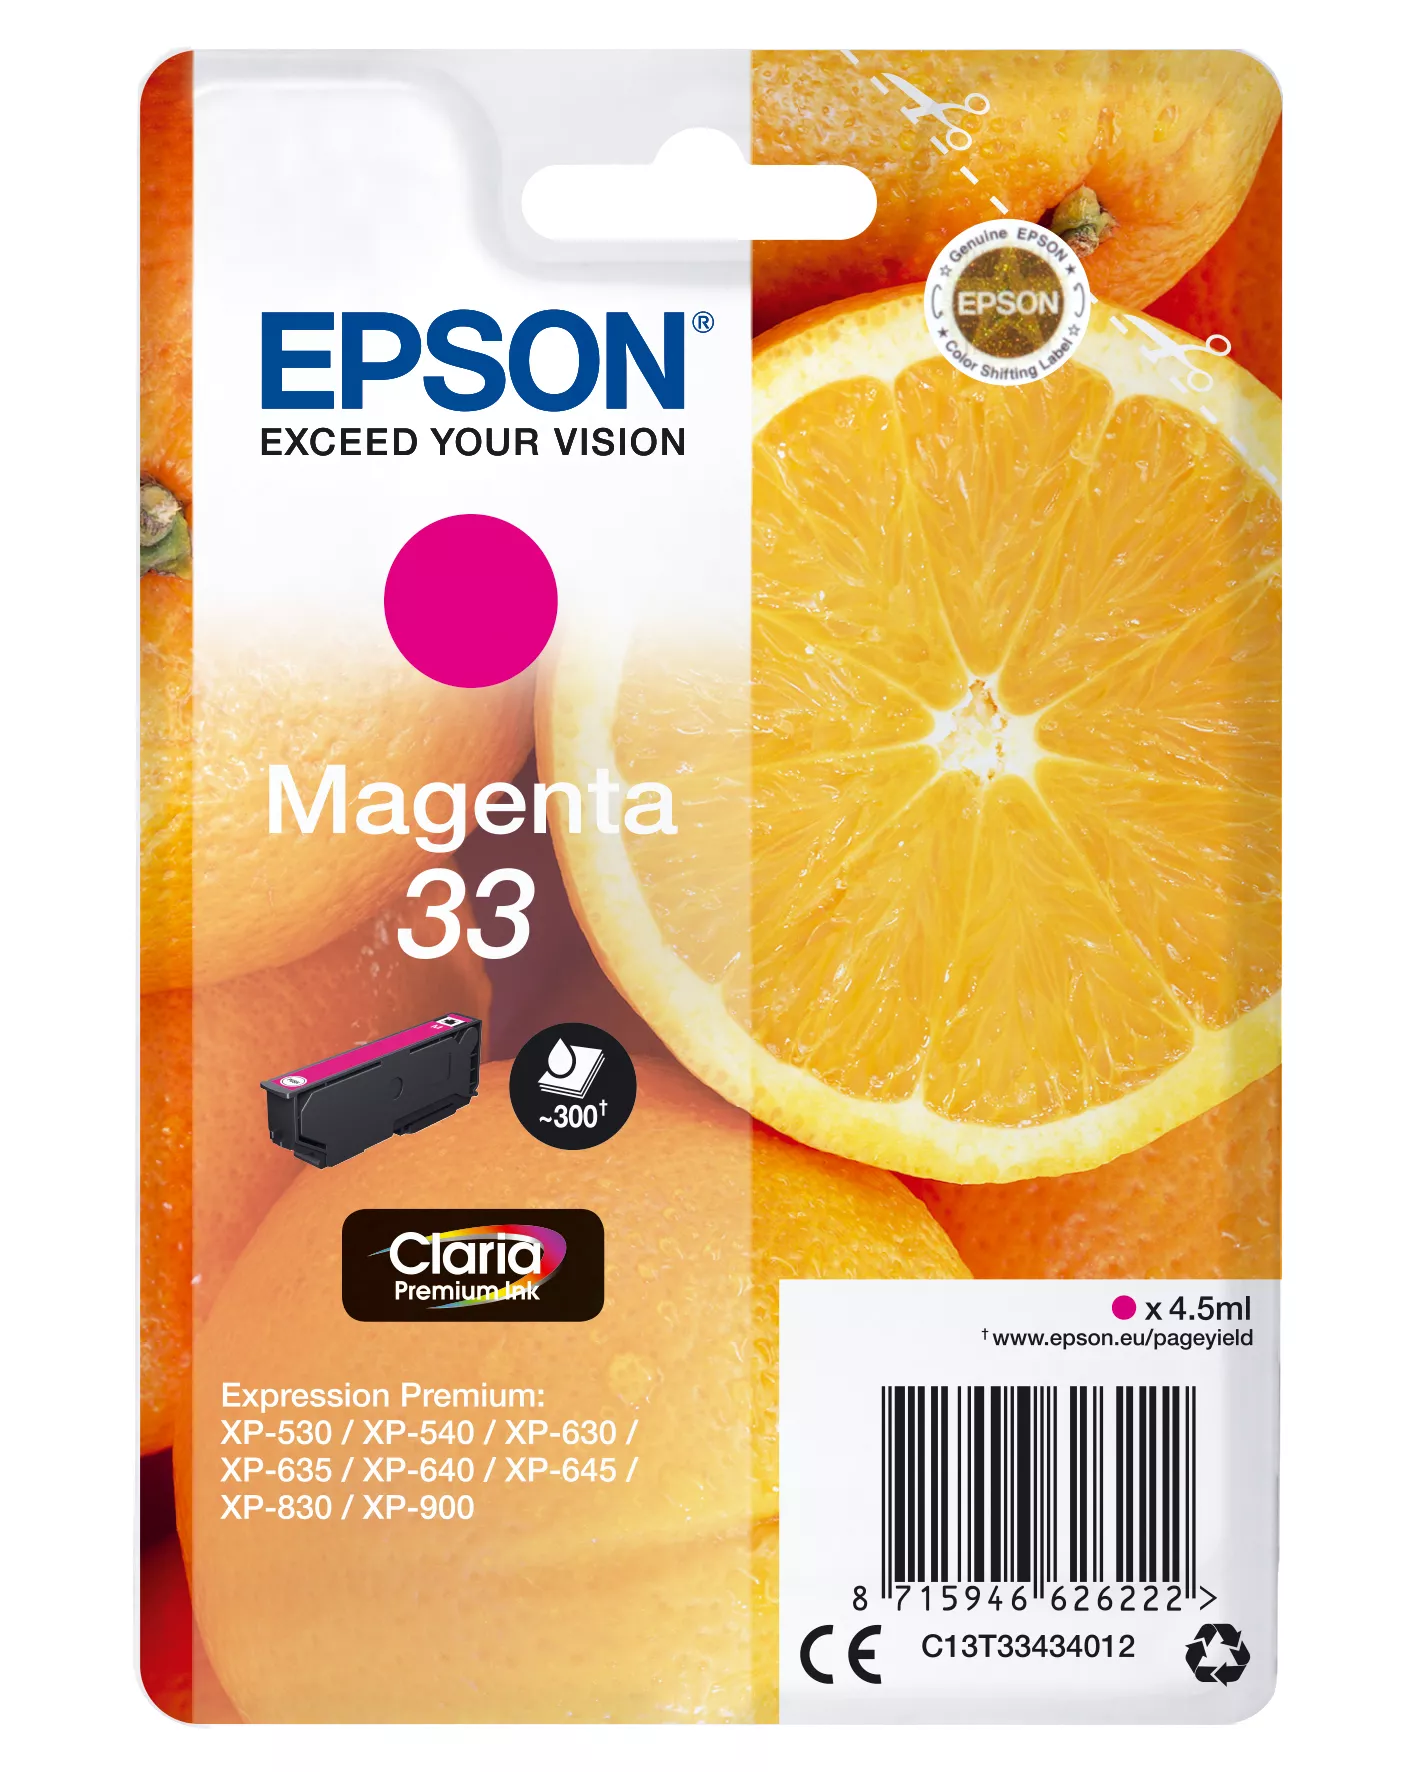 Vente EPSON Cartouche Oranges Encre Claria Premium Magenta au meilleur prix